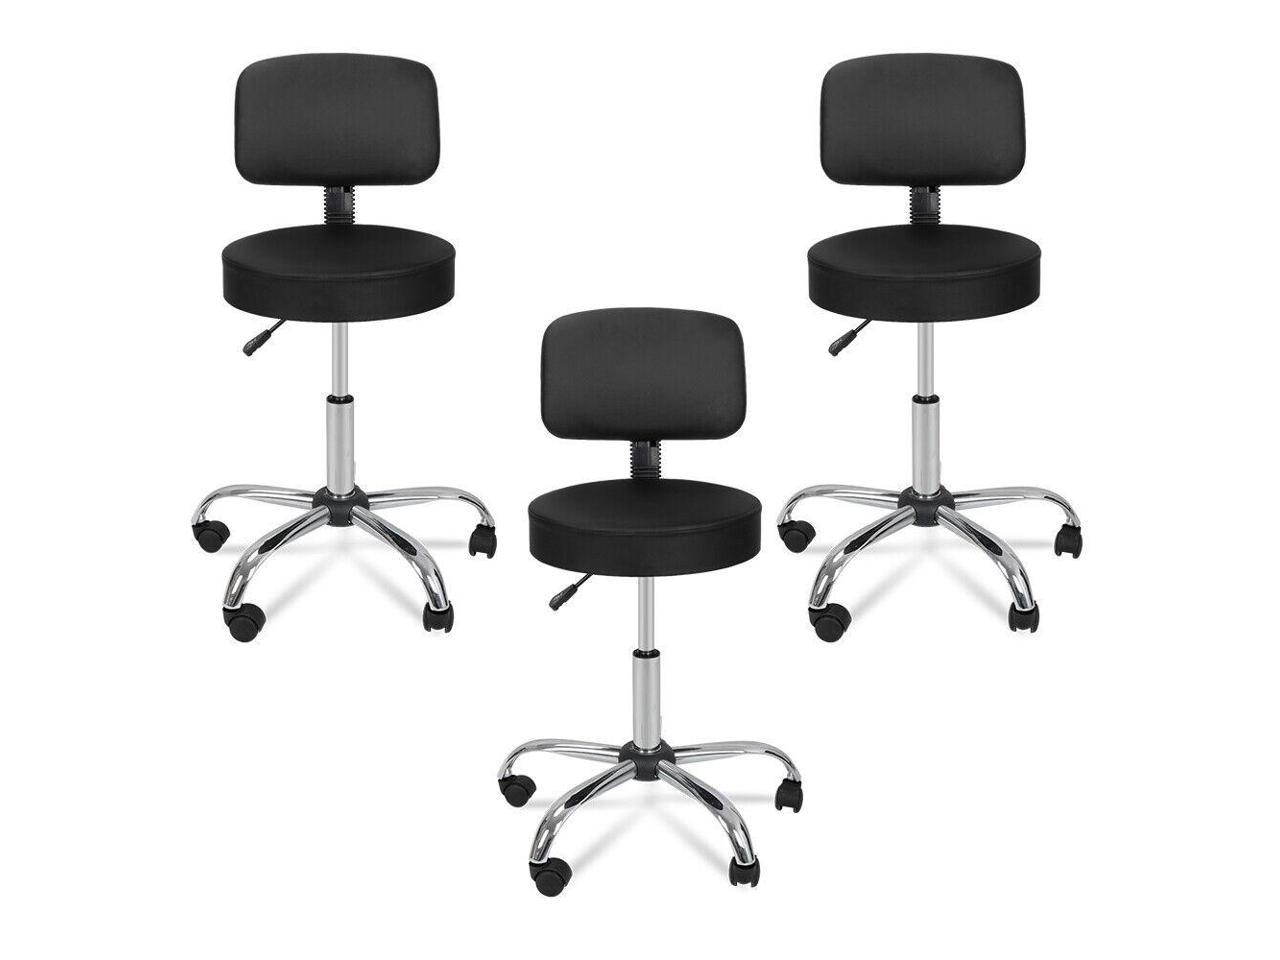 2x Hydraulic Adjustable Rolling Rotatable Chair Massage Stylist Salon Equipment 